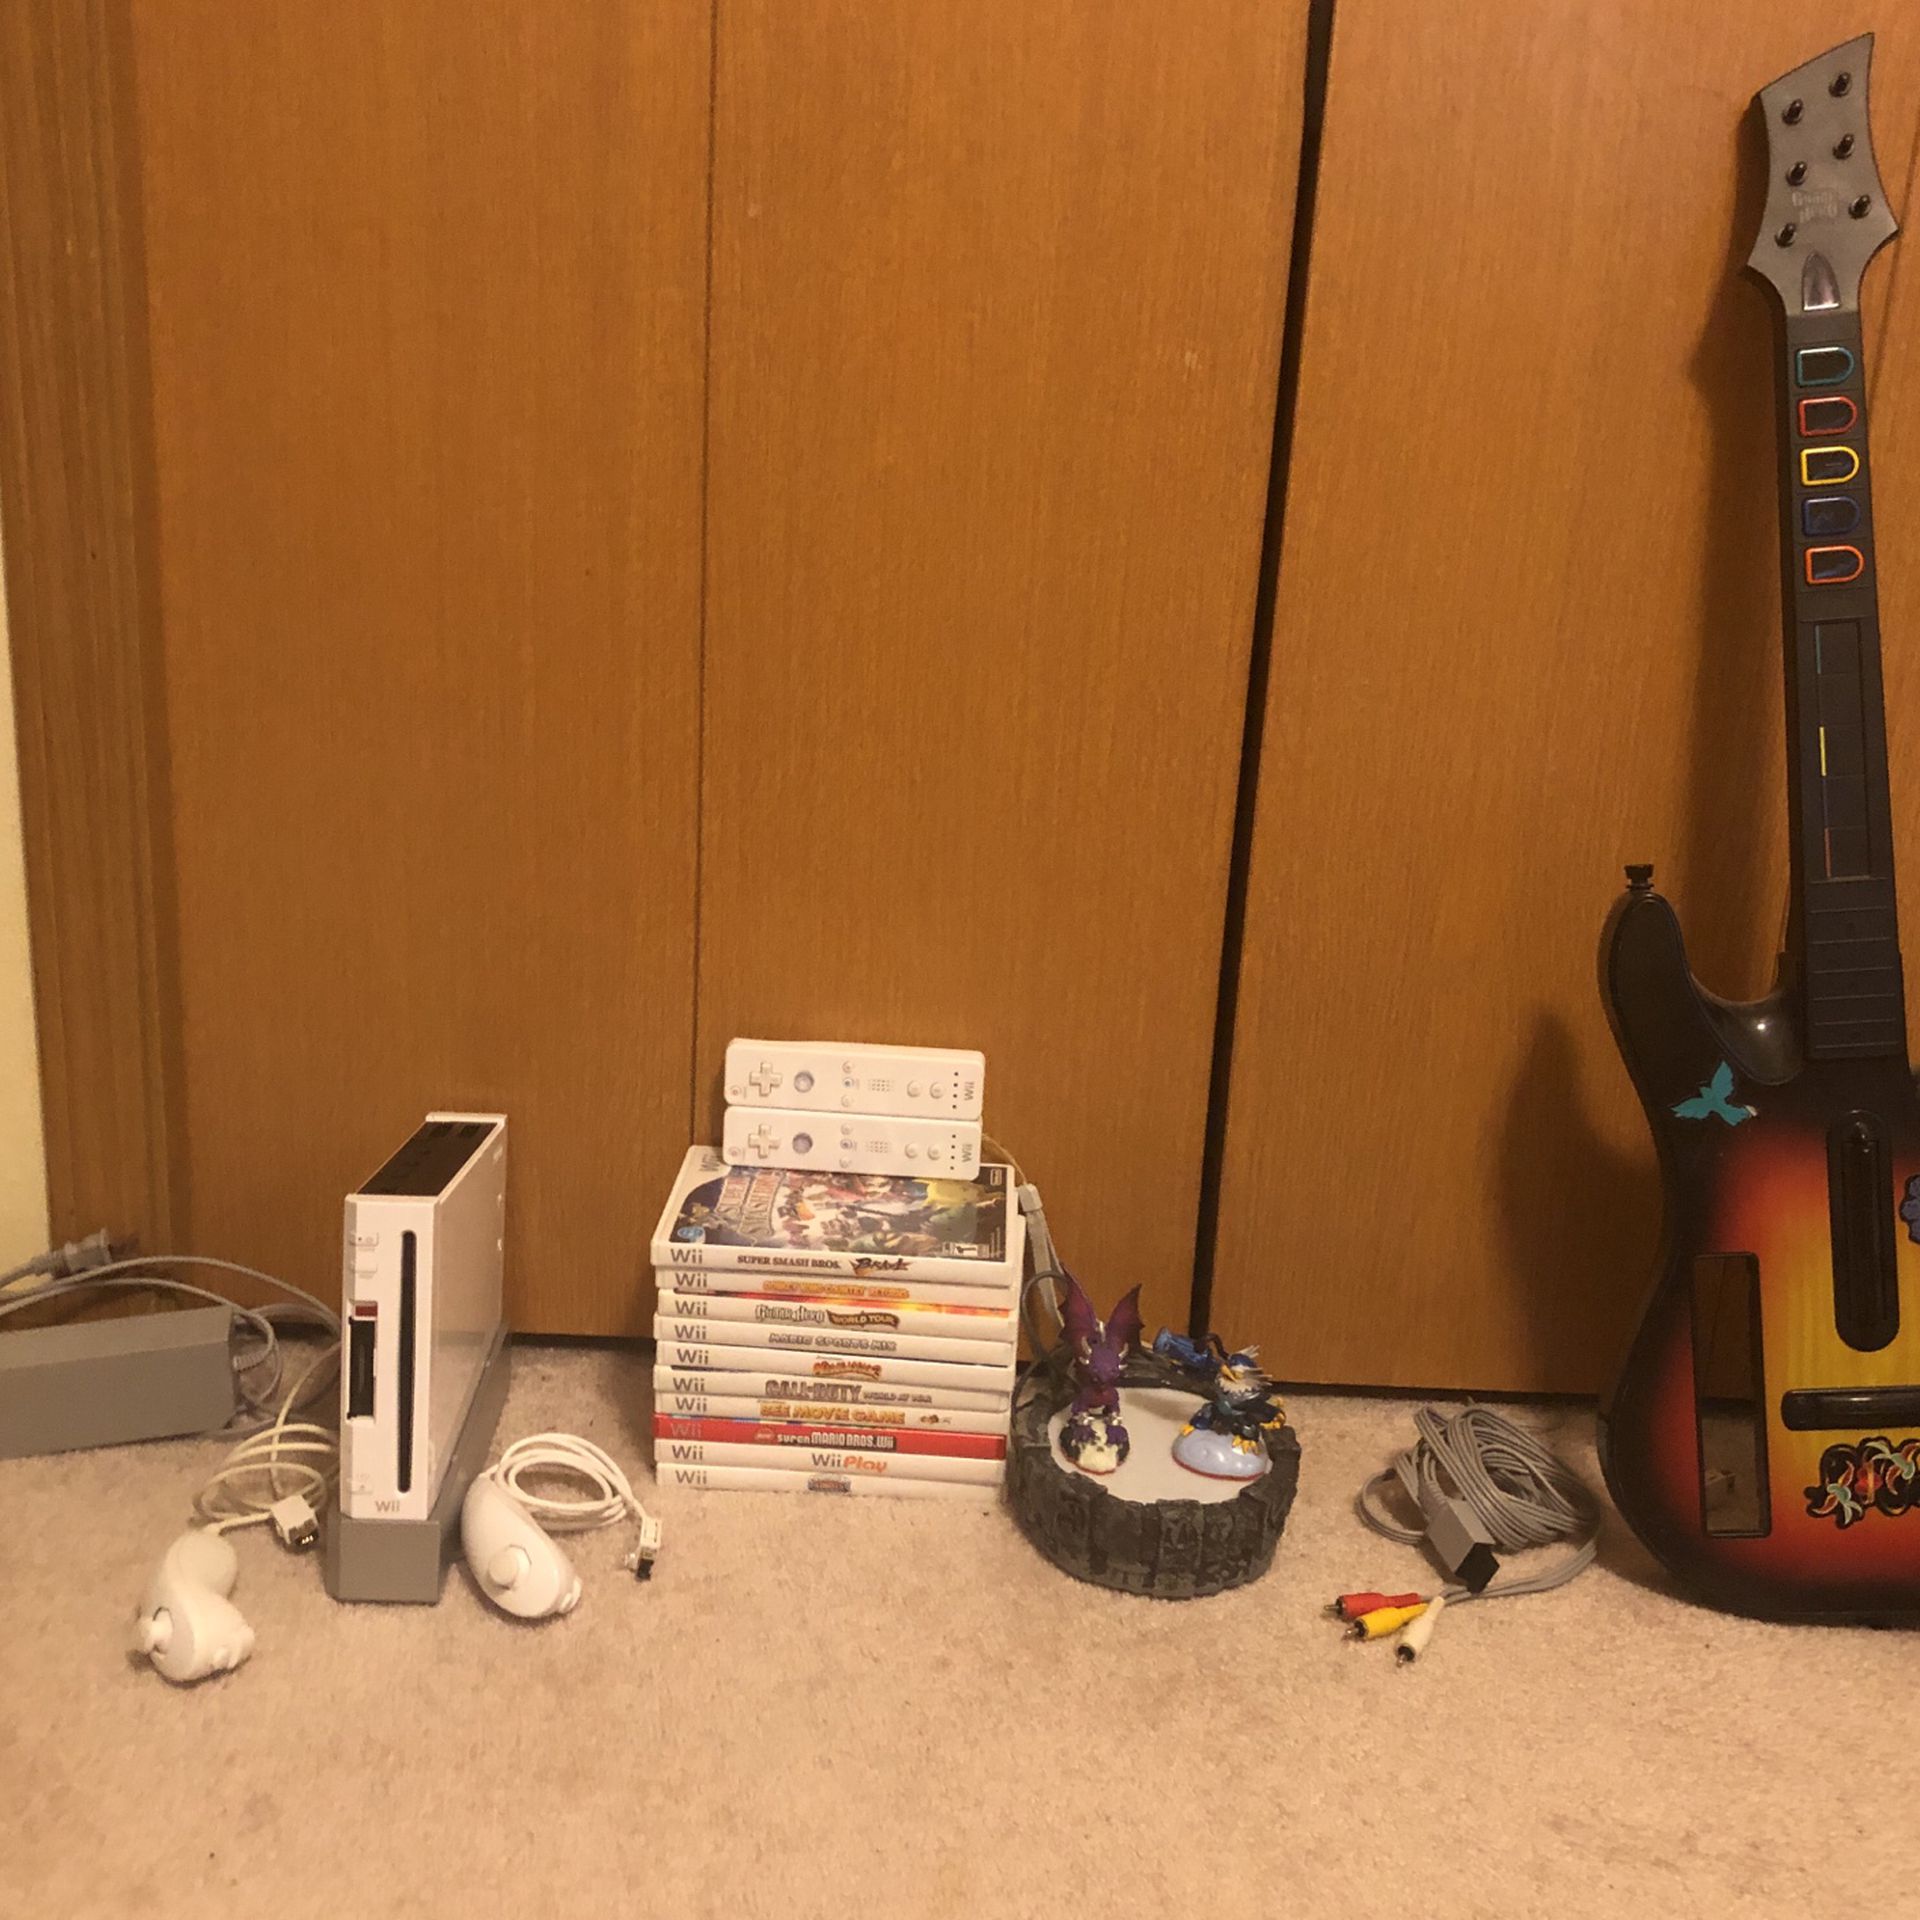 Wii , 2 Remotes 2 Joycons, Skylander Portal 2 Characters, Guitar